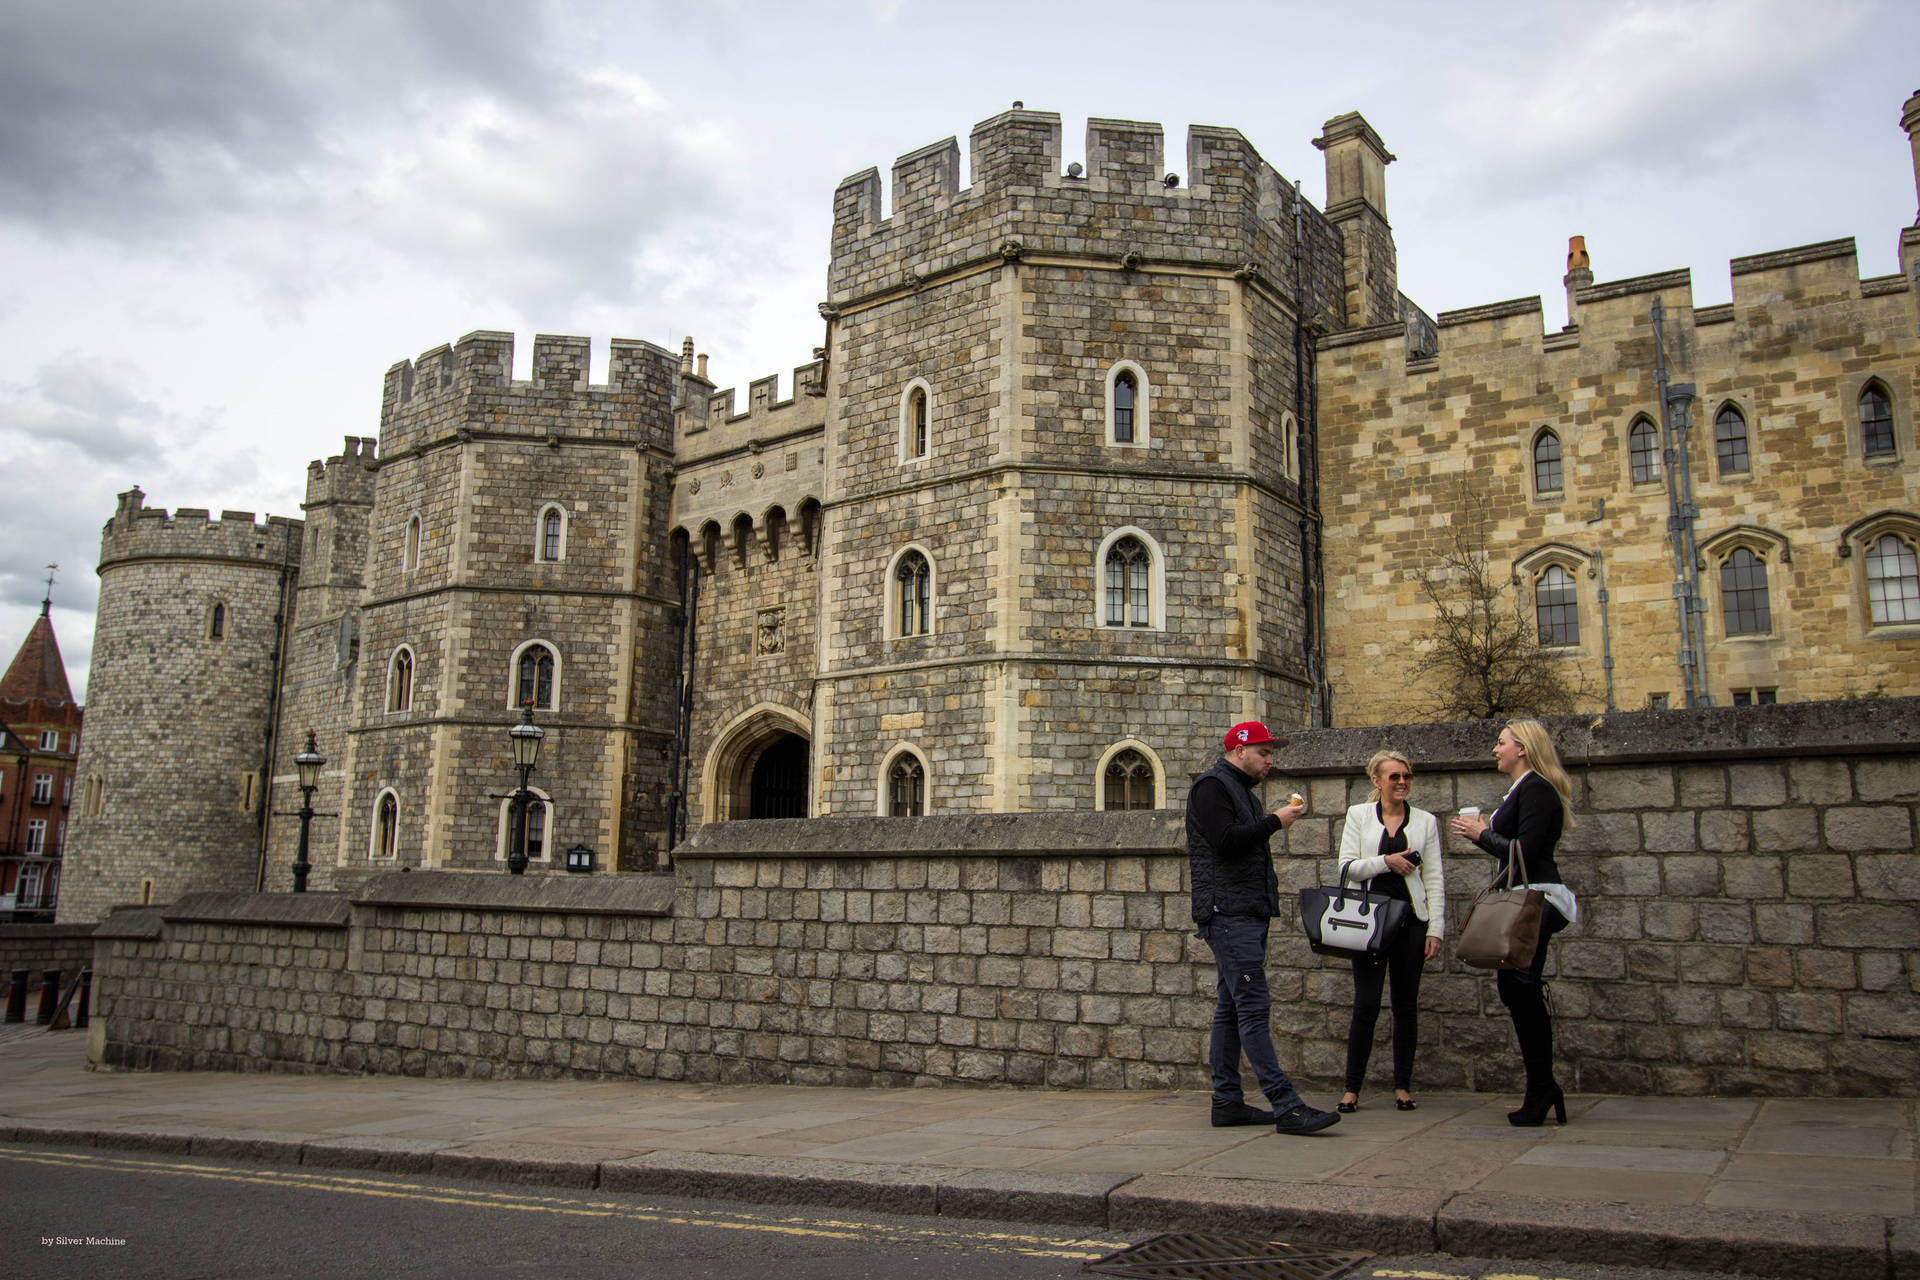 Caption: Majestic Windsor Castle Hosting Tourists Under an Overcast Sky. Wallpaper